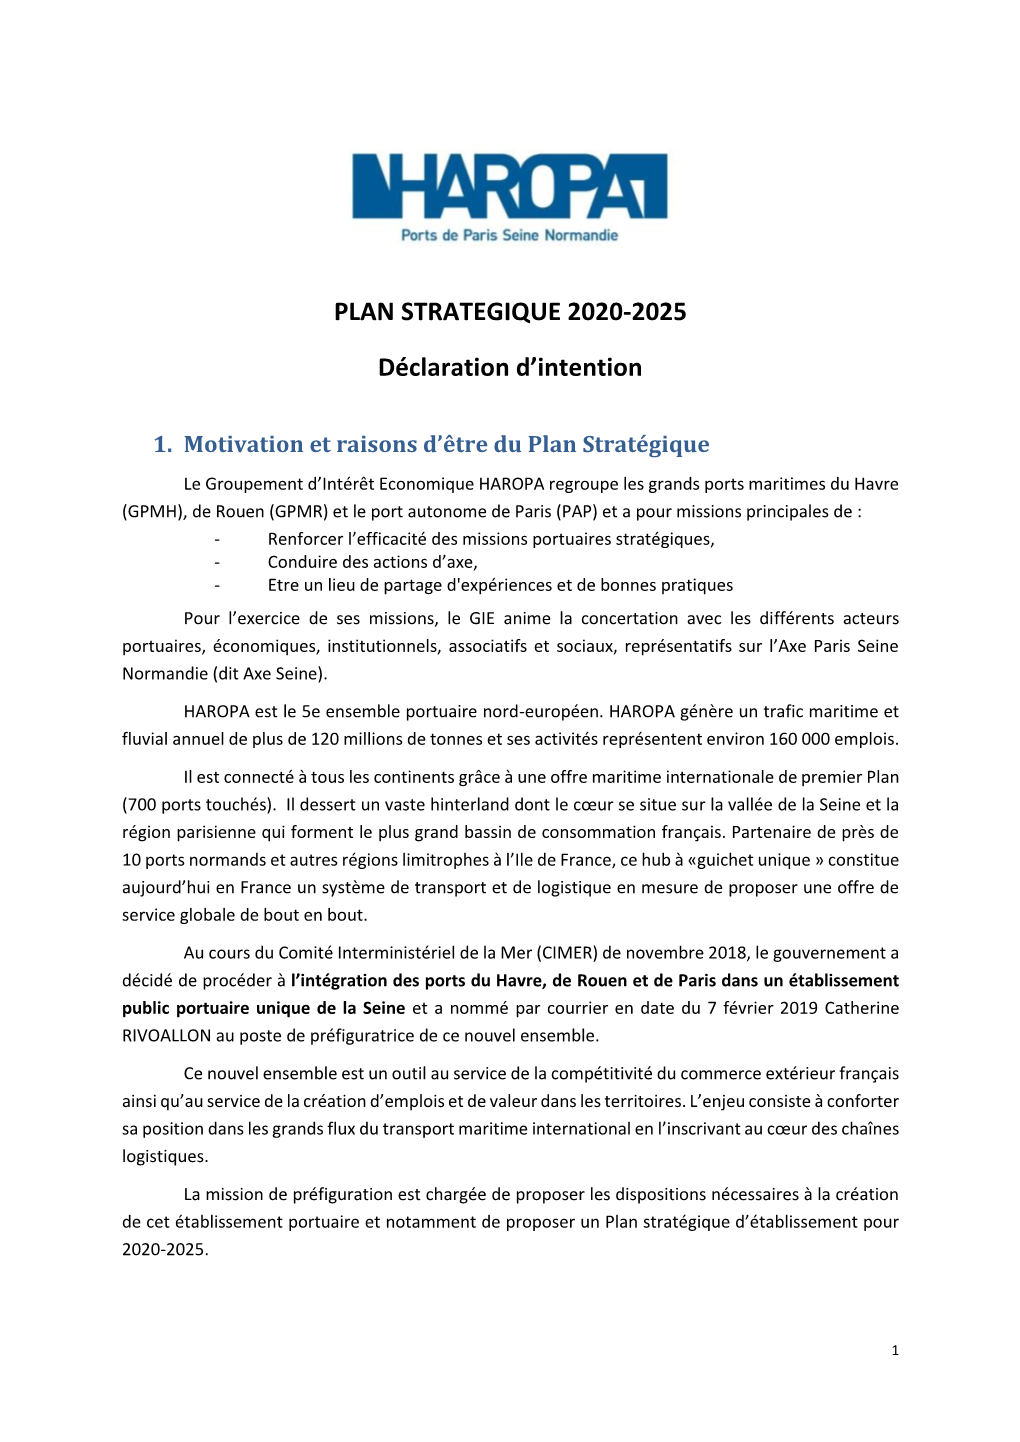 Plan Strategique HAROPA 2020-2025